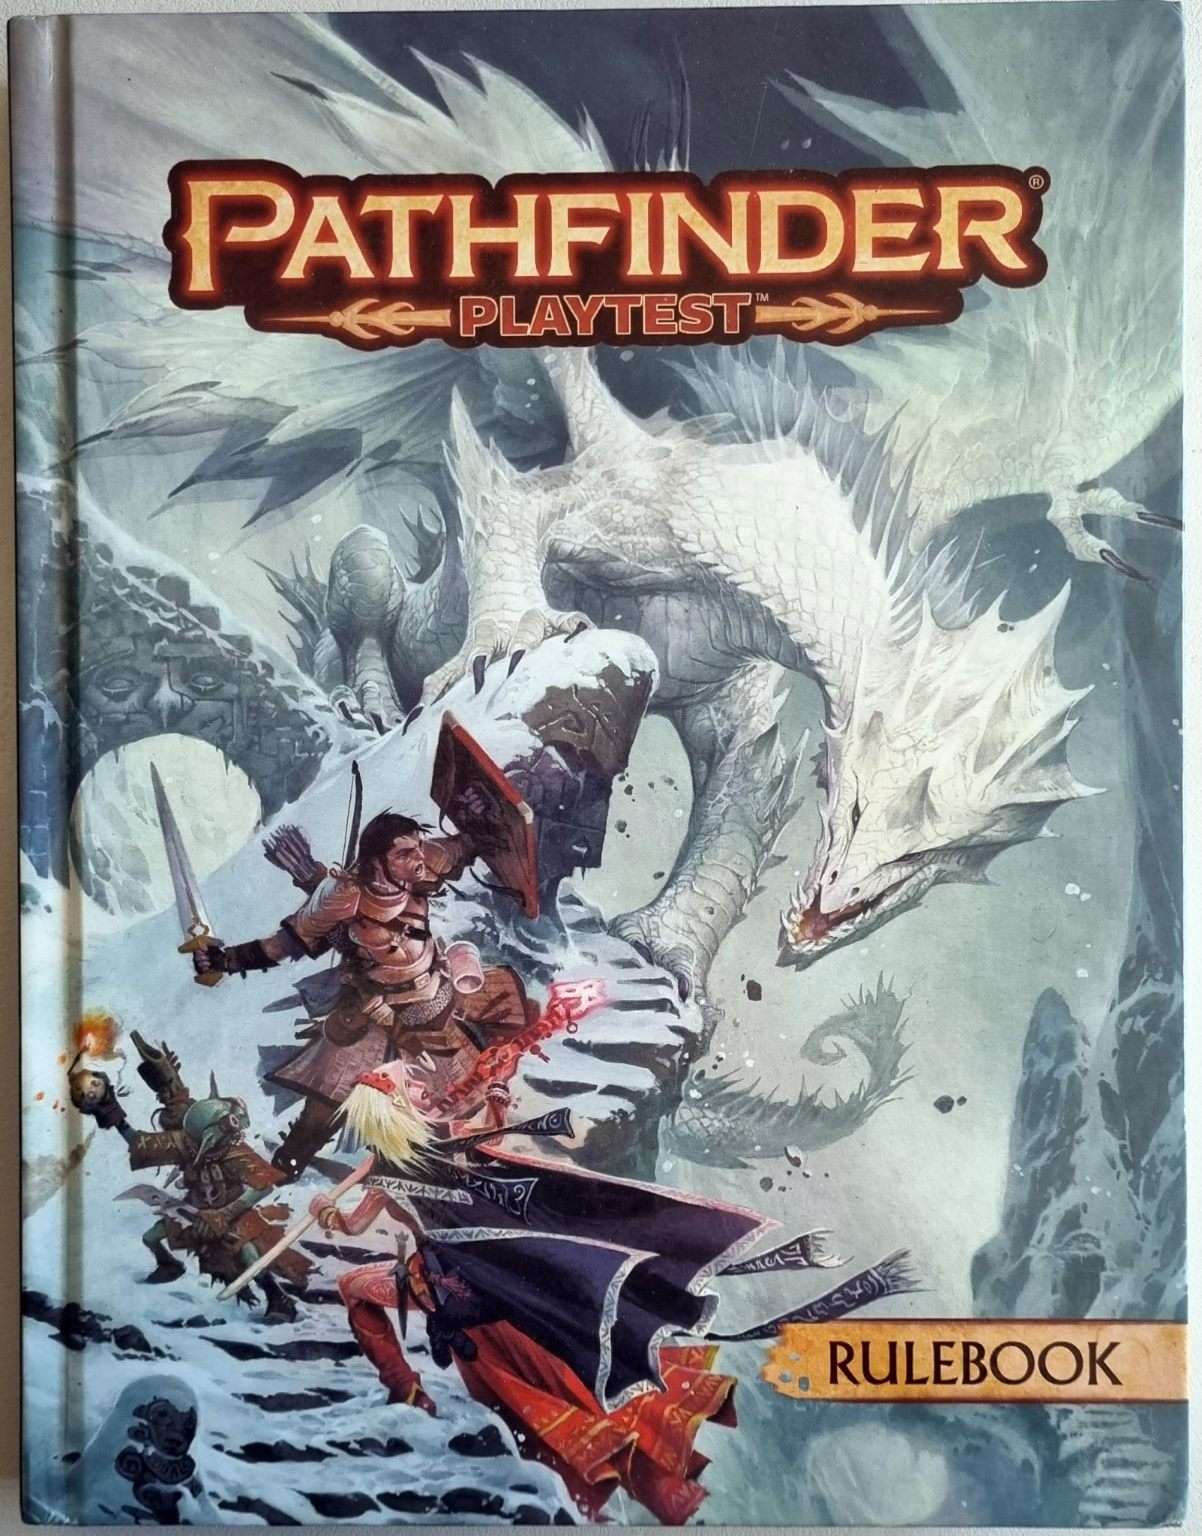 Pathfinder: Playtest Default Title